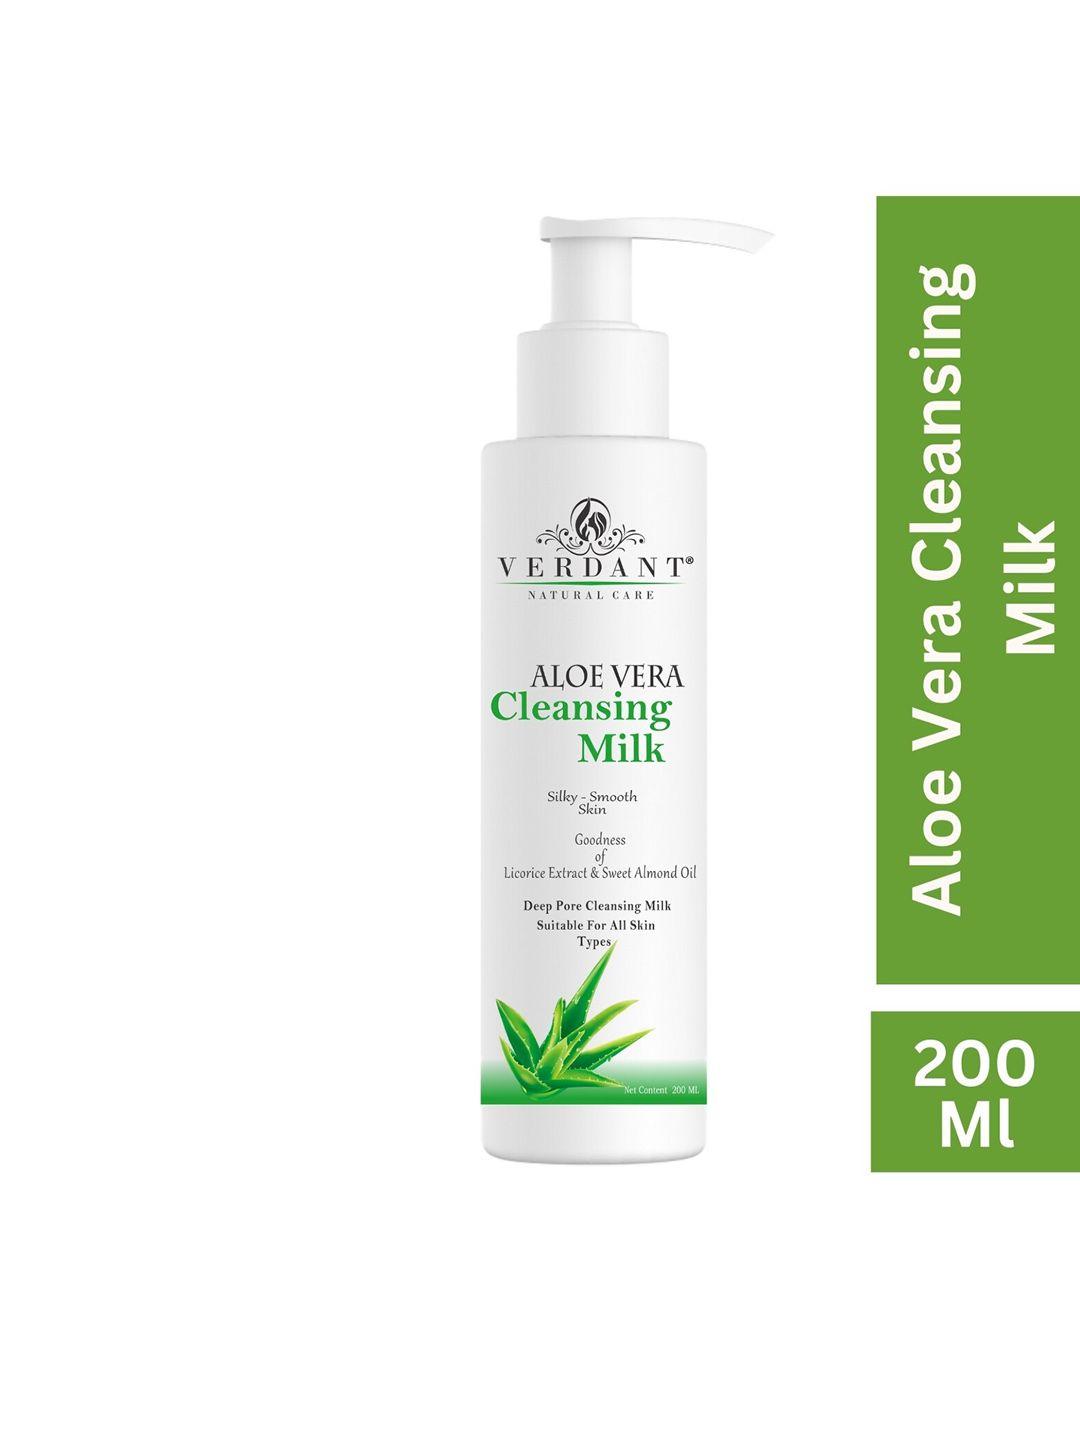 verdant natural care aloe vera cleansing milk & make up remover - 200 ml